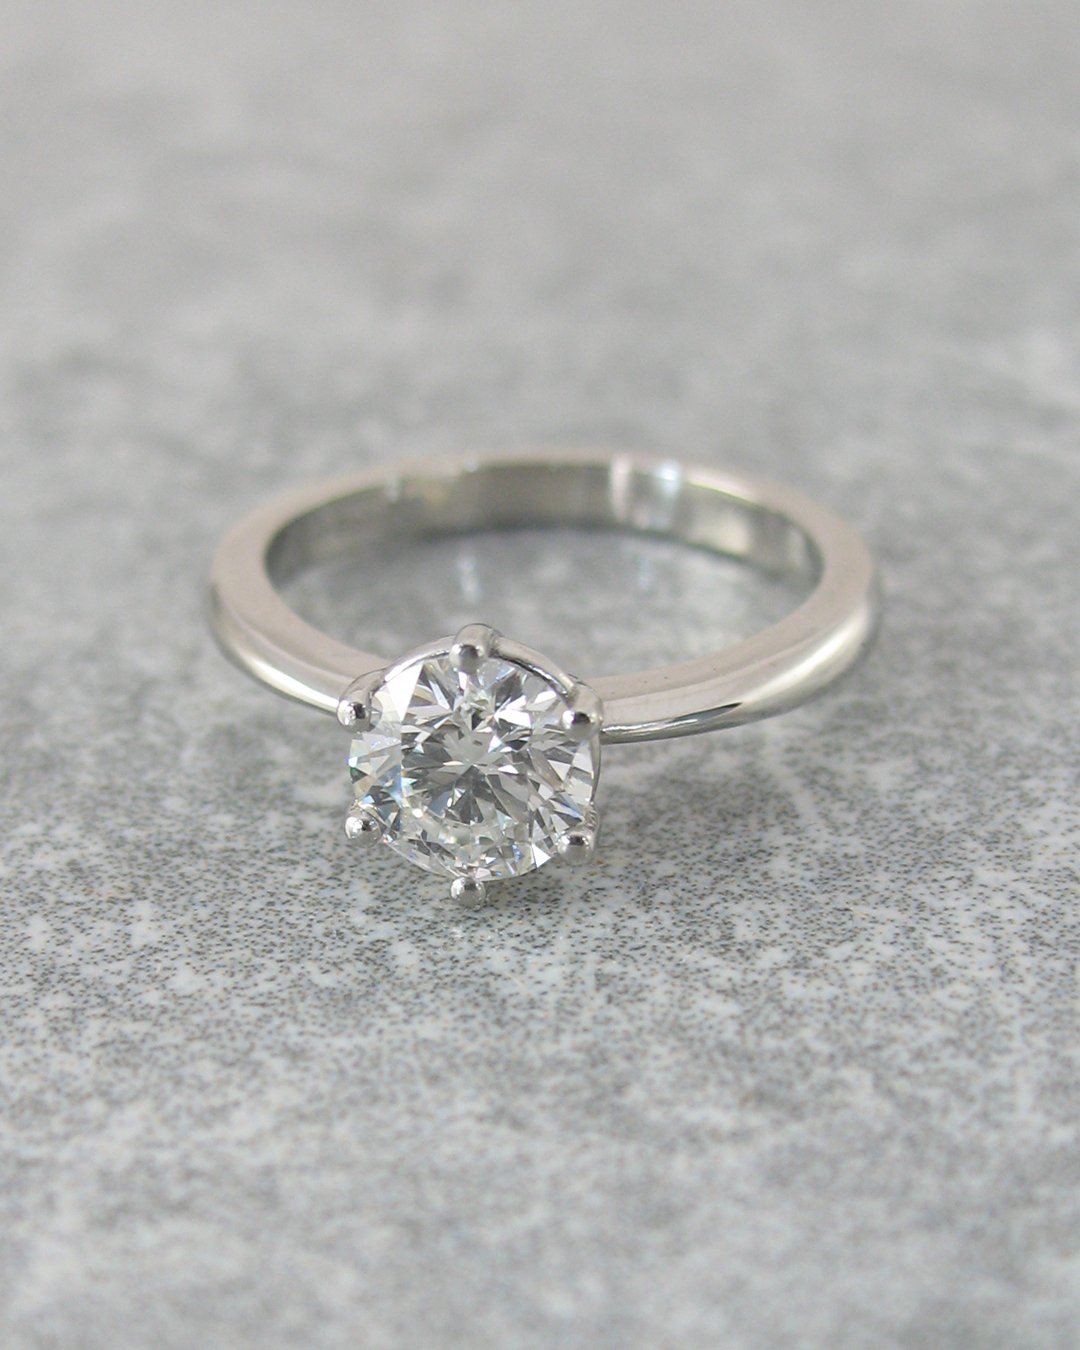 A tulip set solitaire diamond engagement ringA delicate custom diamond engagement ring with tulip shaped setting